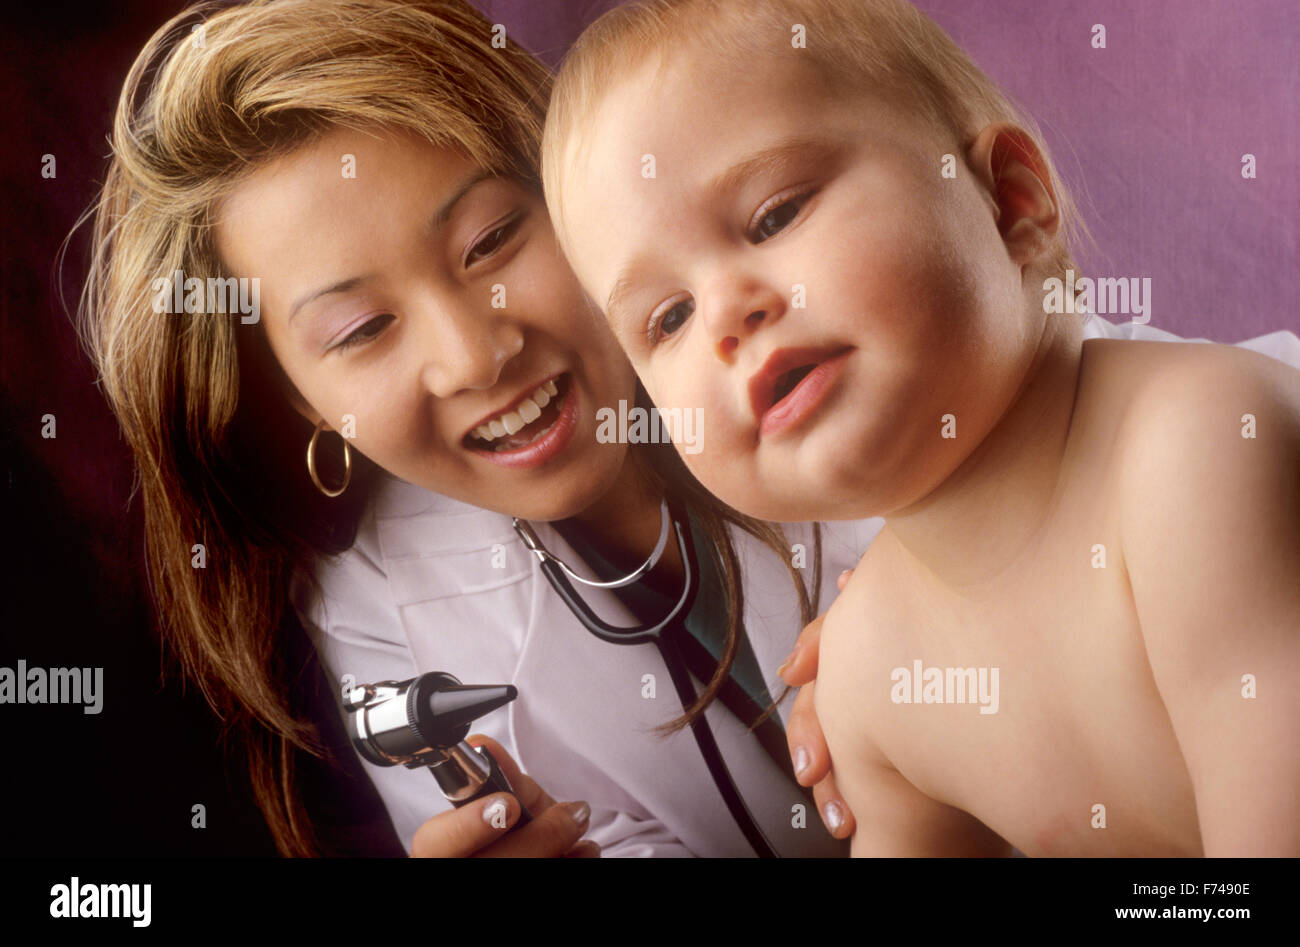 doctor examining child patient Stock Photo